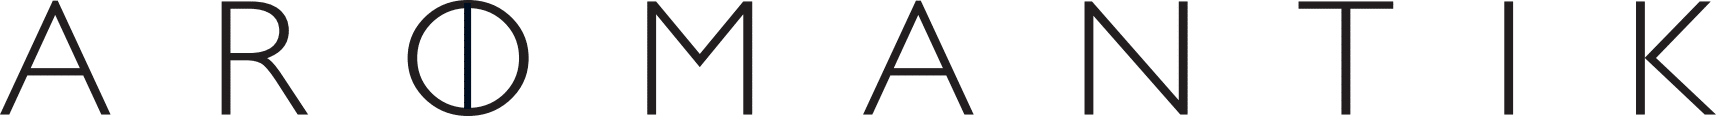 Aromantik logo